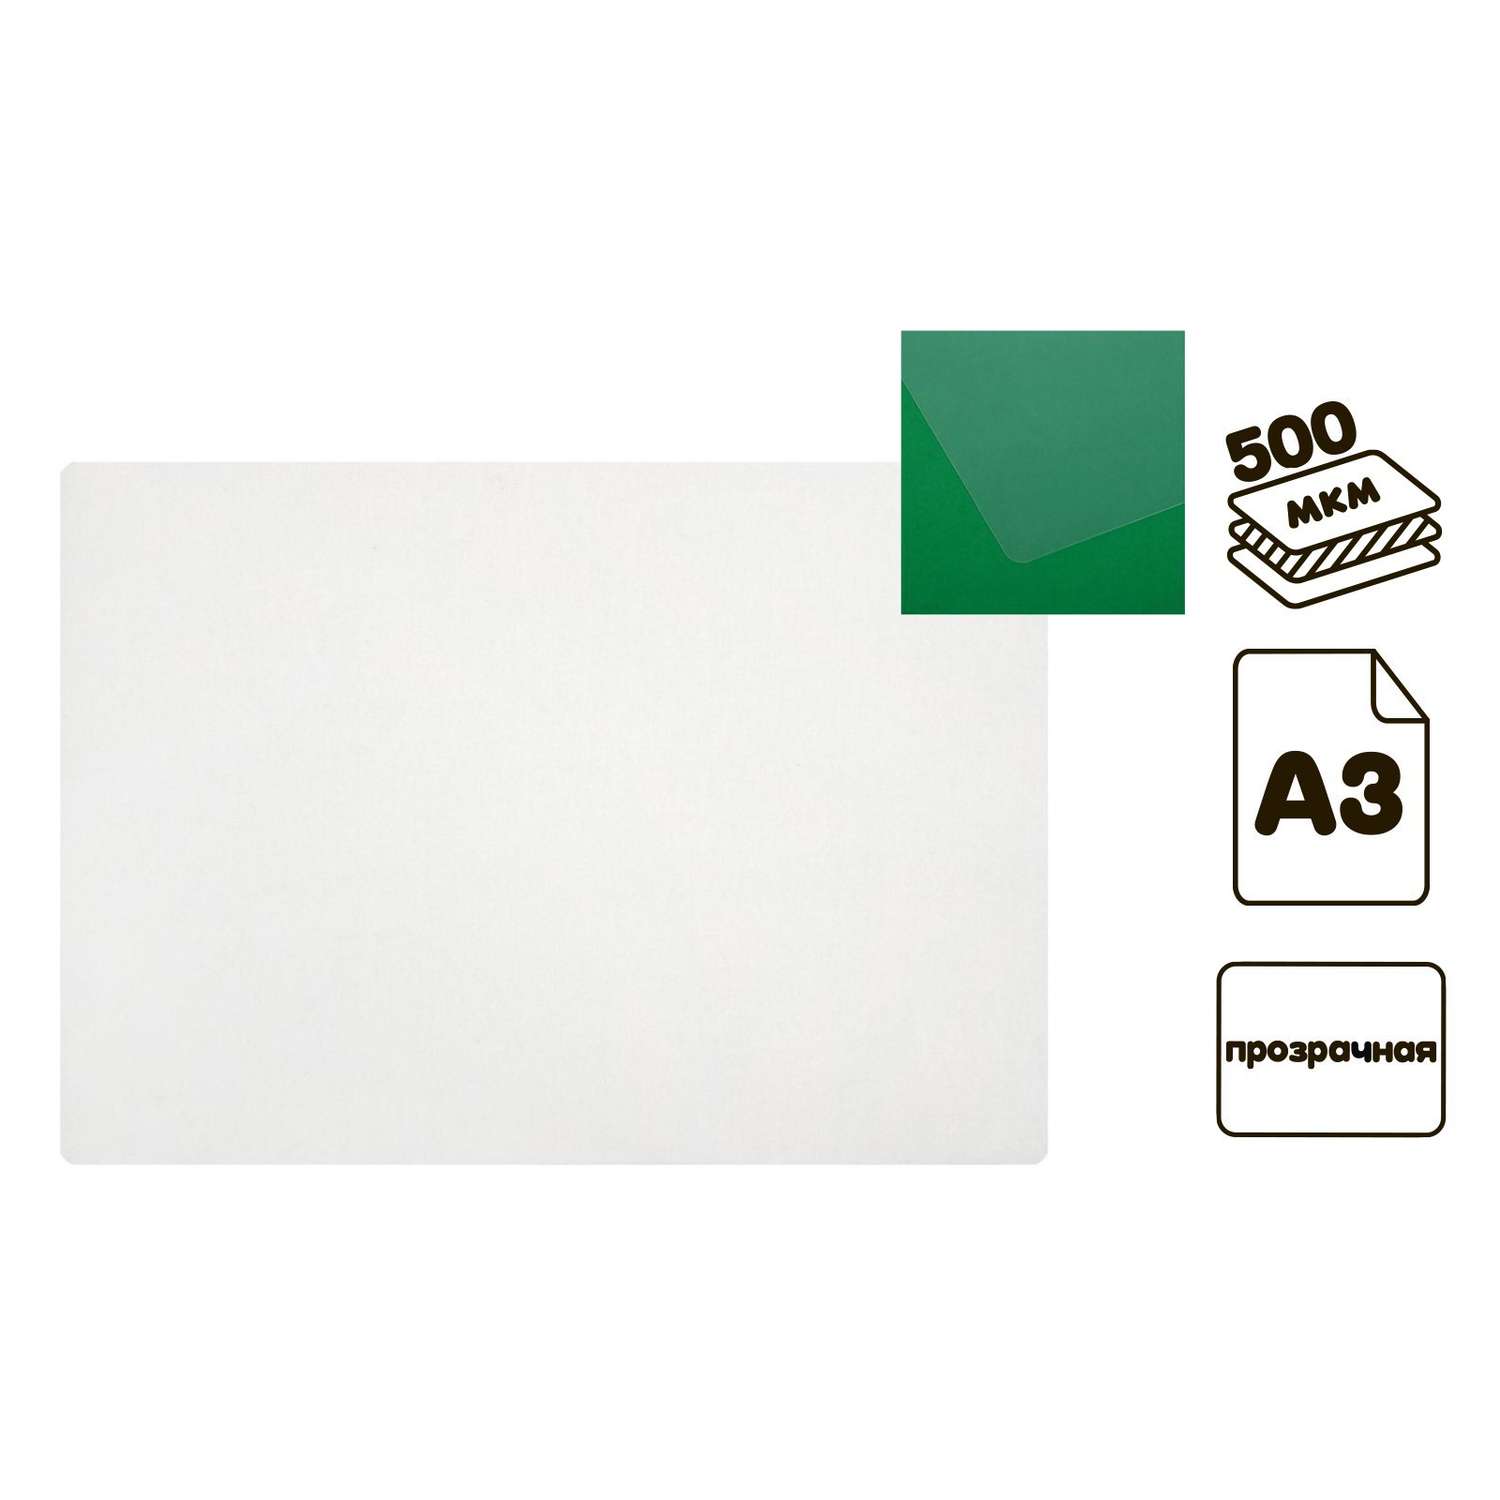 Накладка на стол Calligrata пластиковая А3 460 х 330 мм 500 мкм прозрачная бесцветная подходит для офиса - фото 1